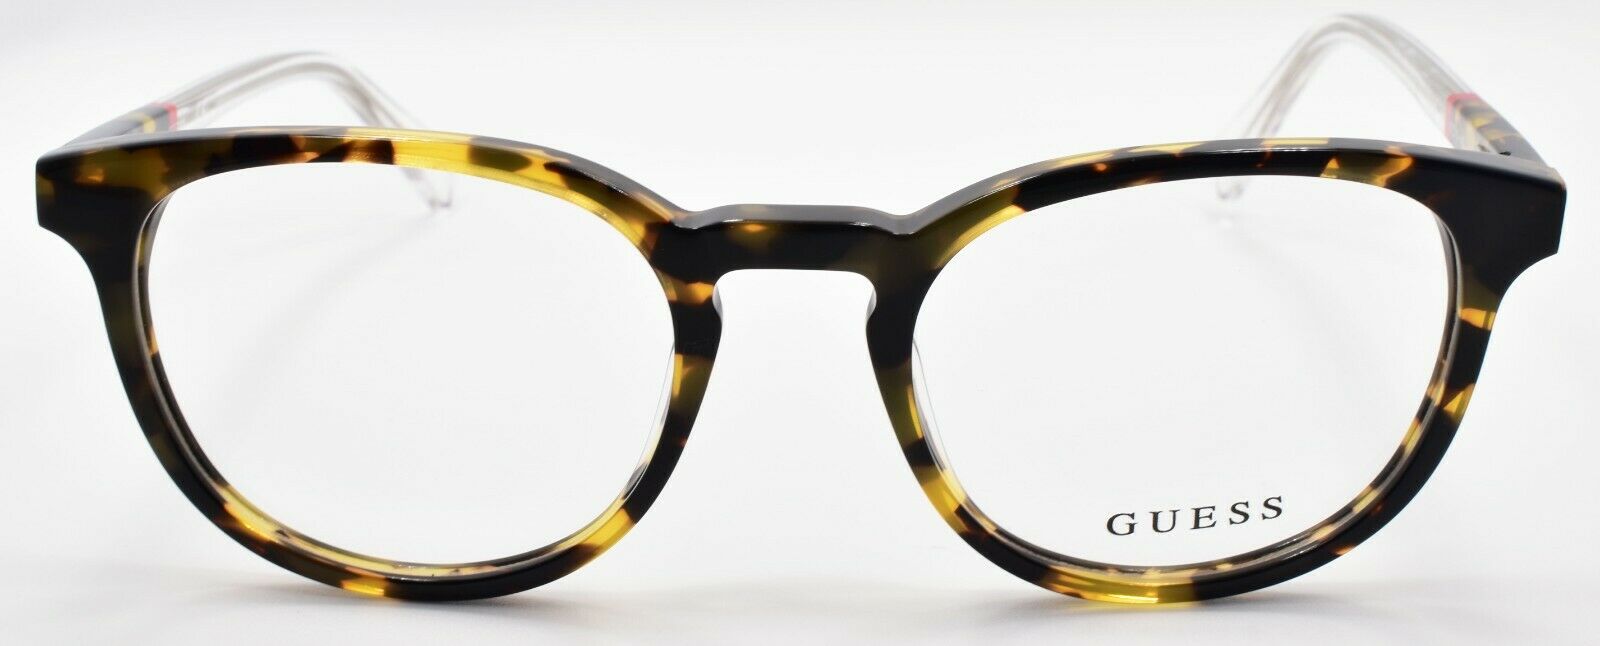 2-GUESS GU1973 055 Men's Eyeglasses Frames 49-19-145 Havana / Clear-889214044105-IKSpecs